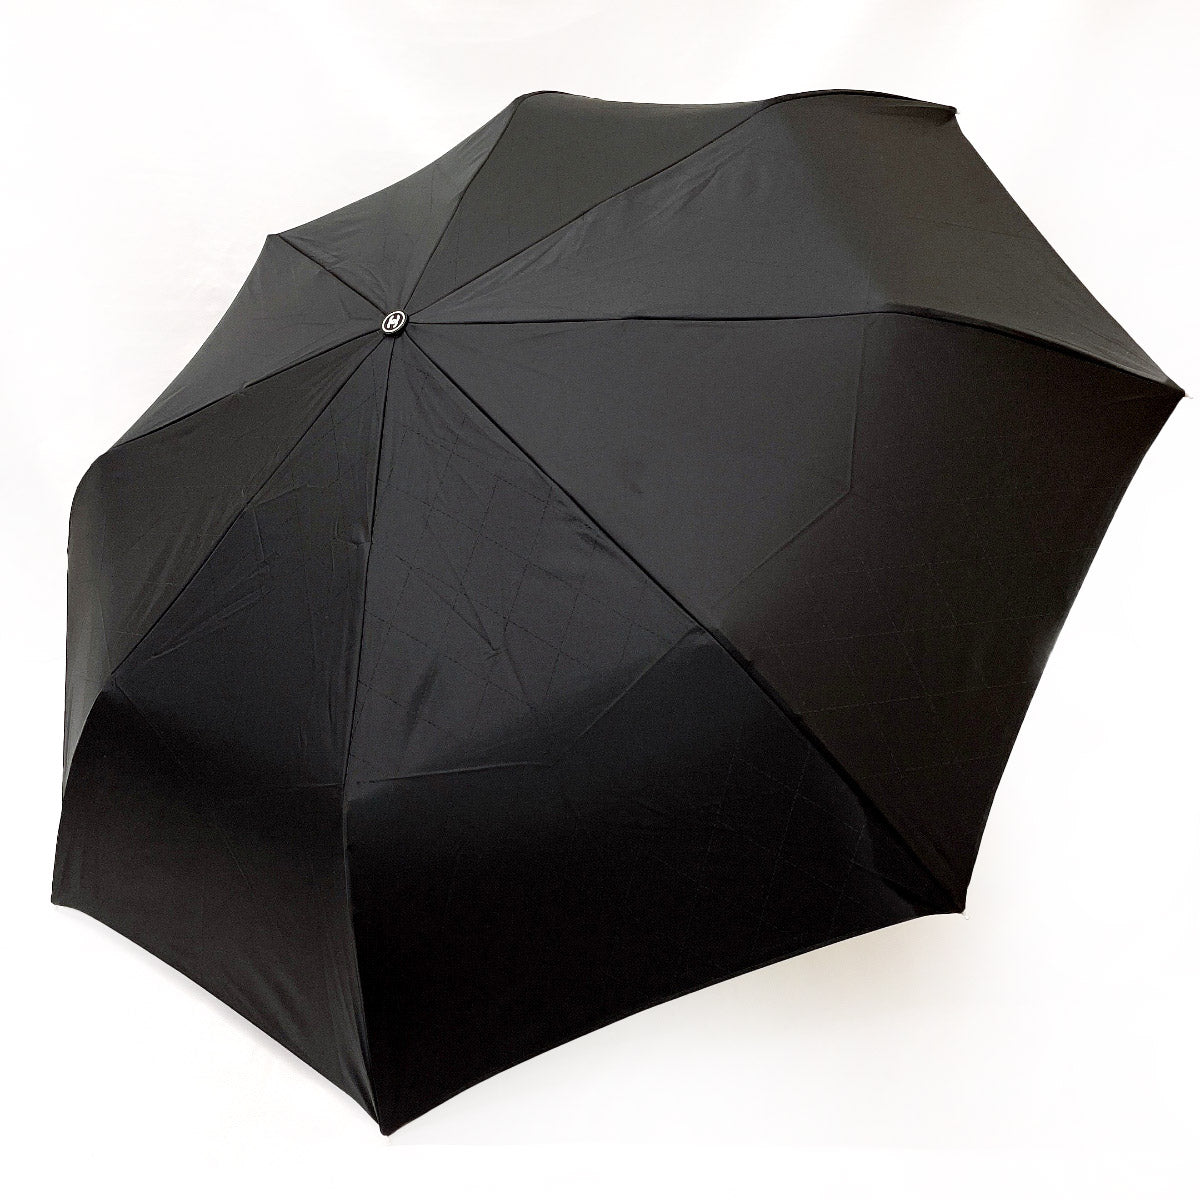 CHANEL Other accessories Matelassepattern folding umbrella Nylon